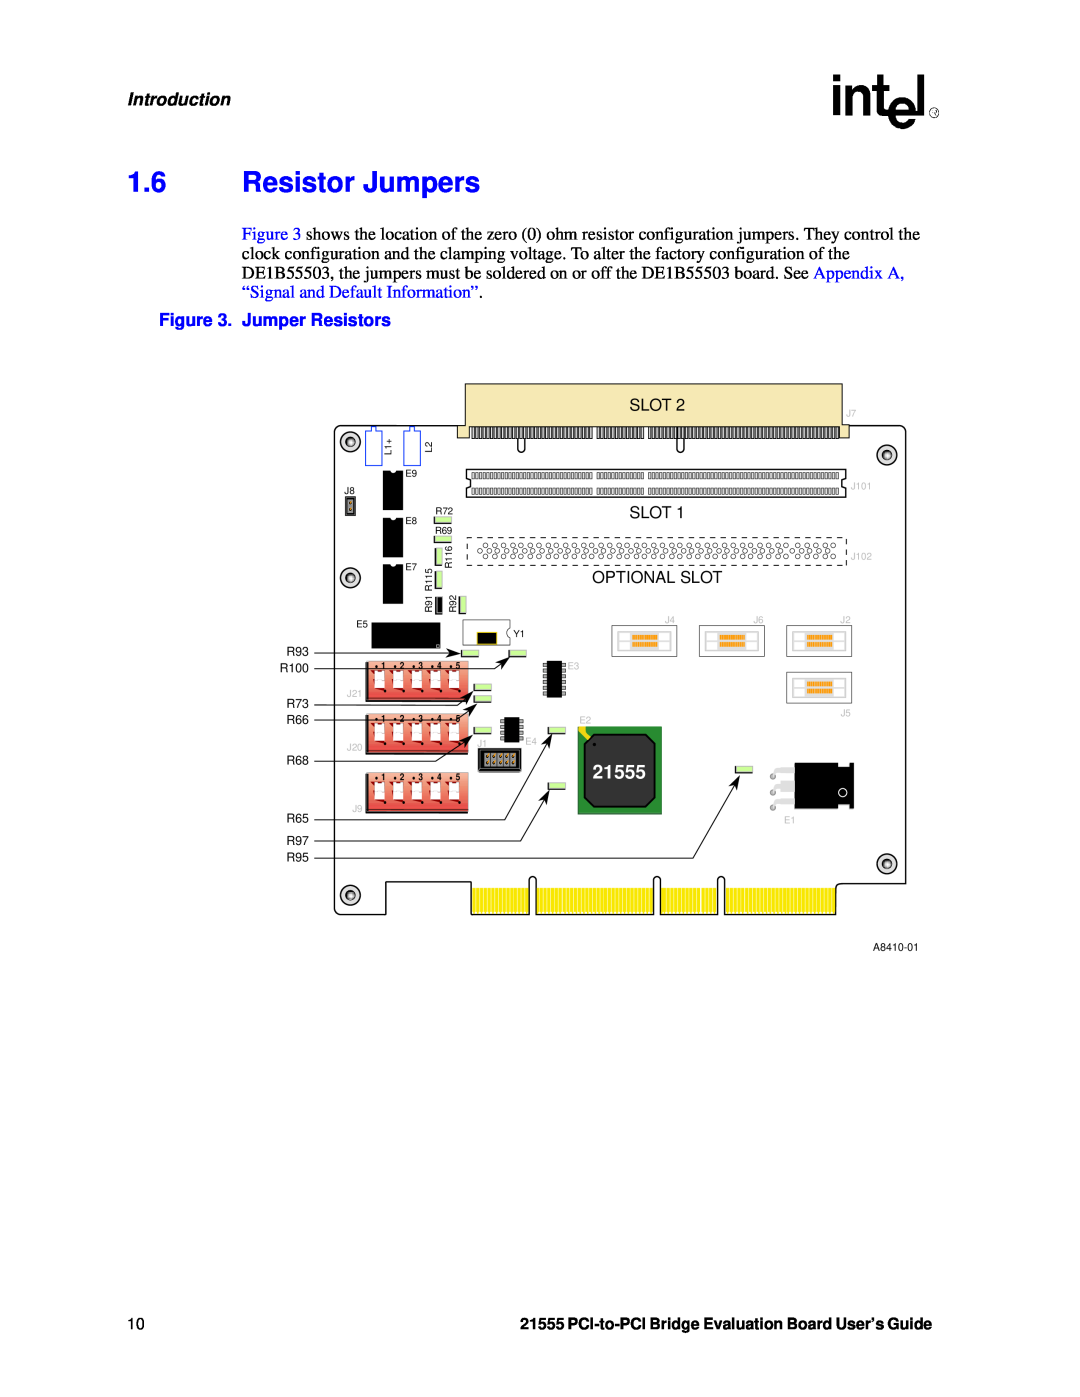 Intel 21555 manual Resistor Jumpers, Introduction, Jumper Resistors 